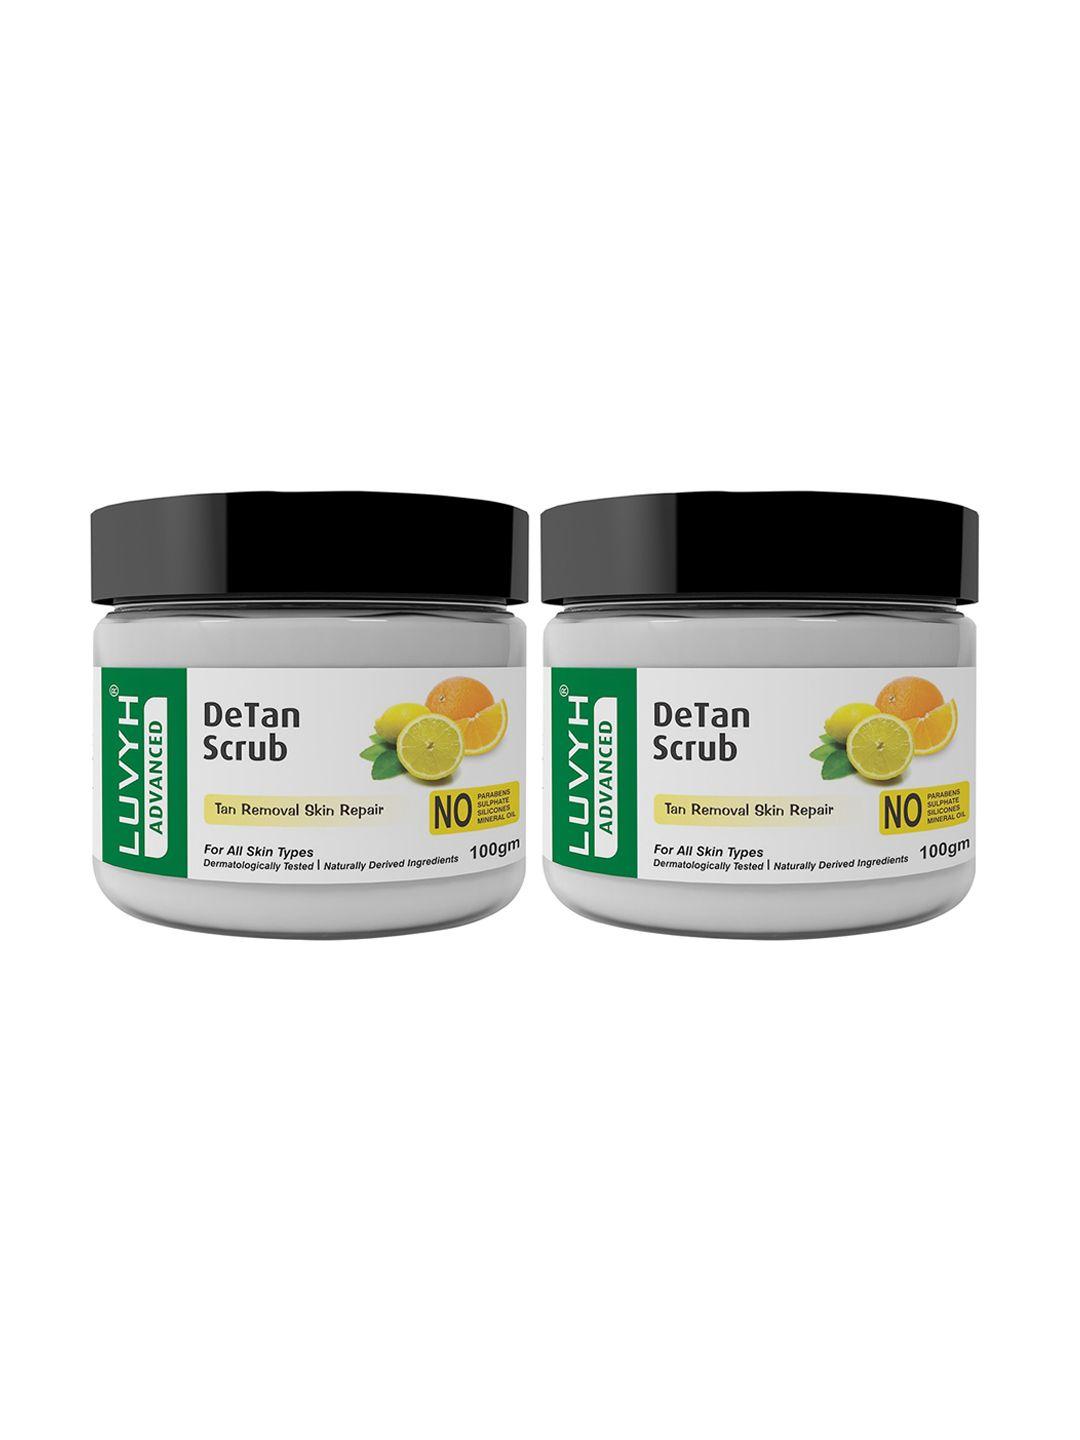 luvyh advanced set of 2 de-tan scrub for tan removal skin repair - 100 g each